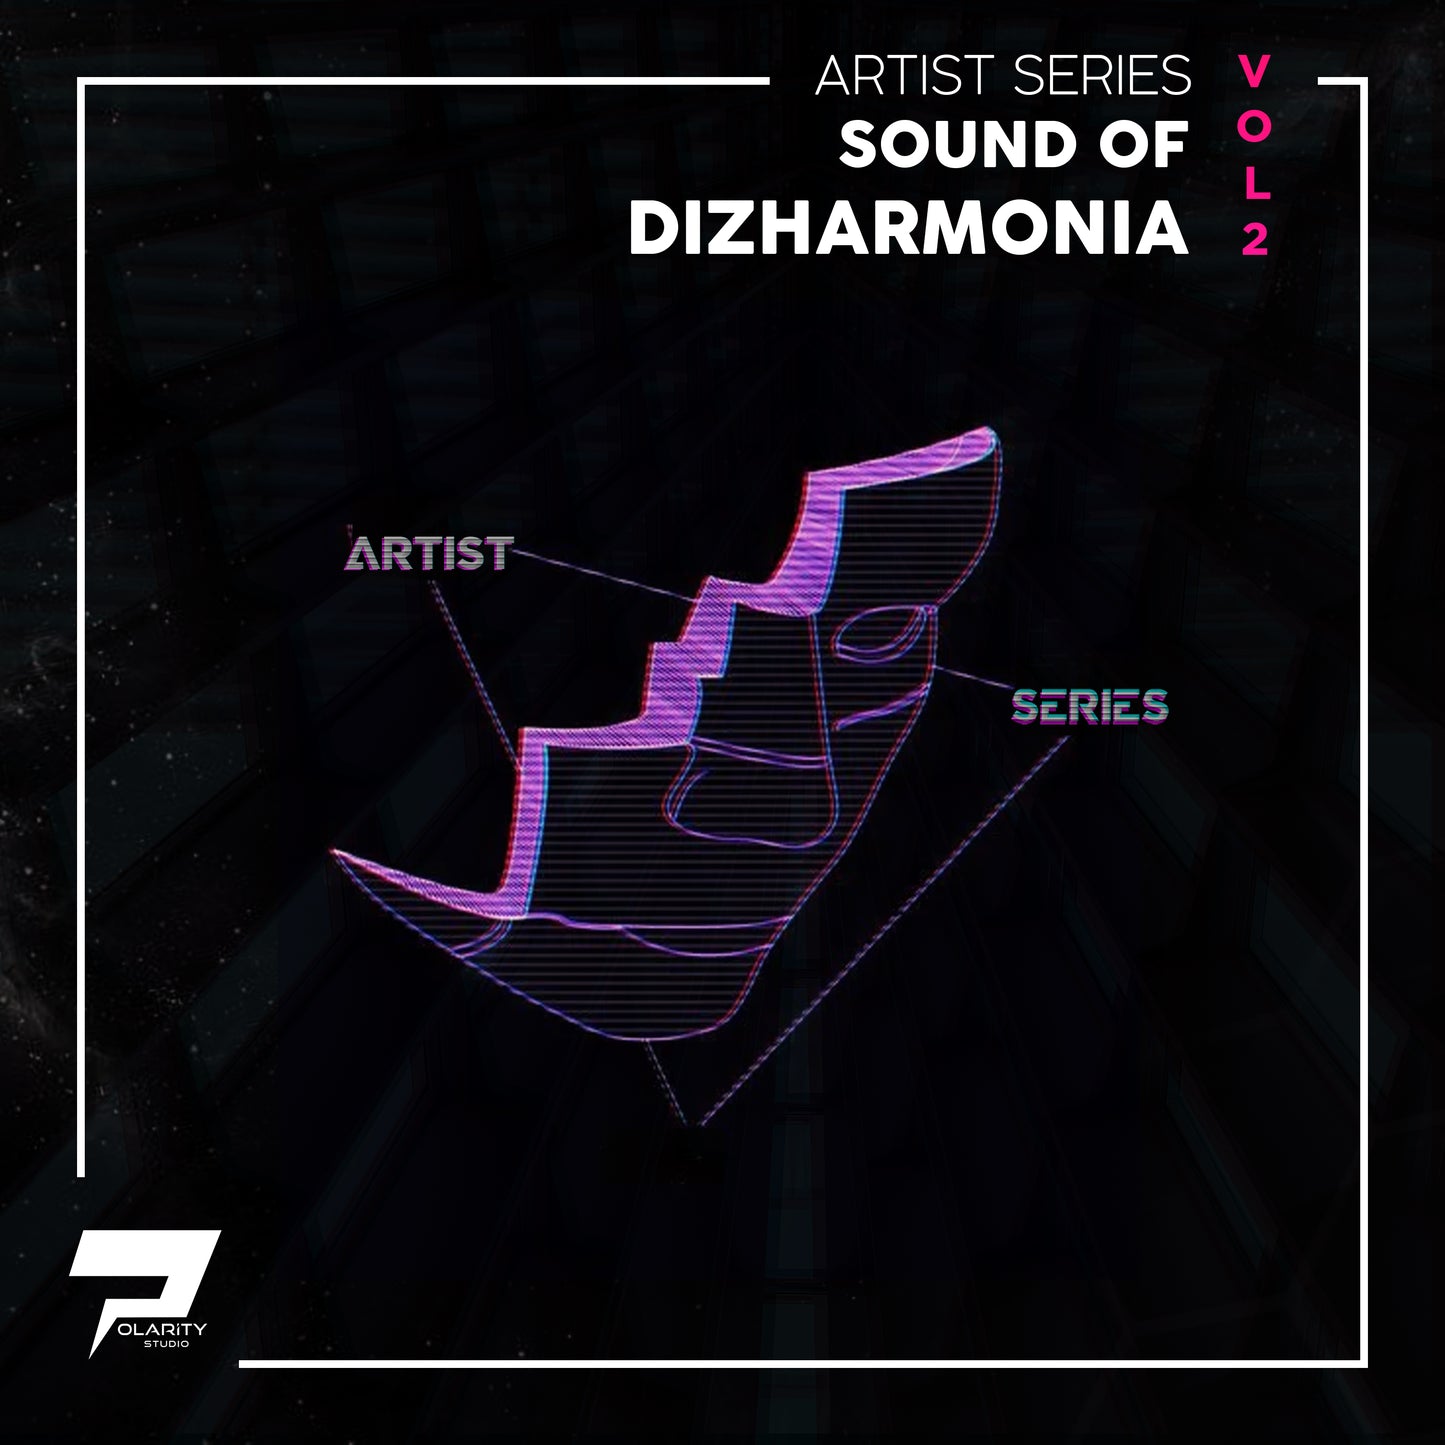 The Sounds Of Dizharmonia